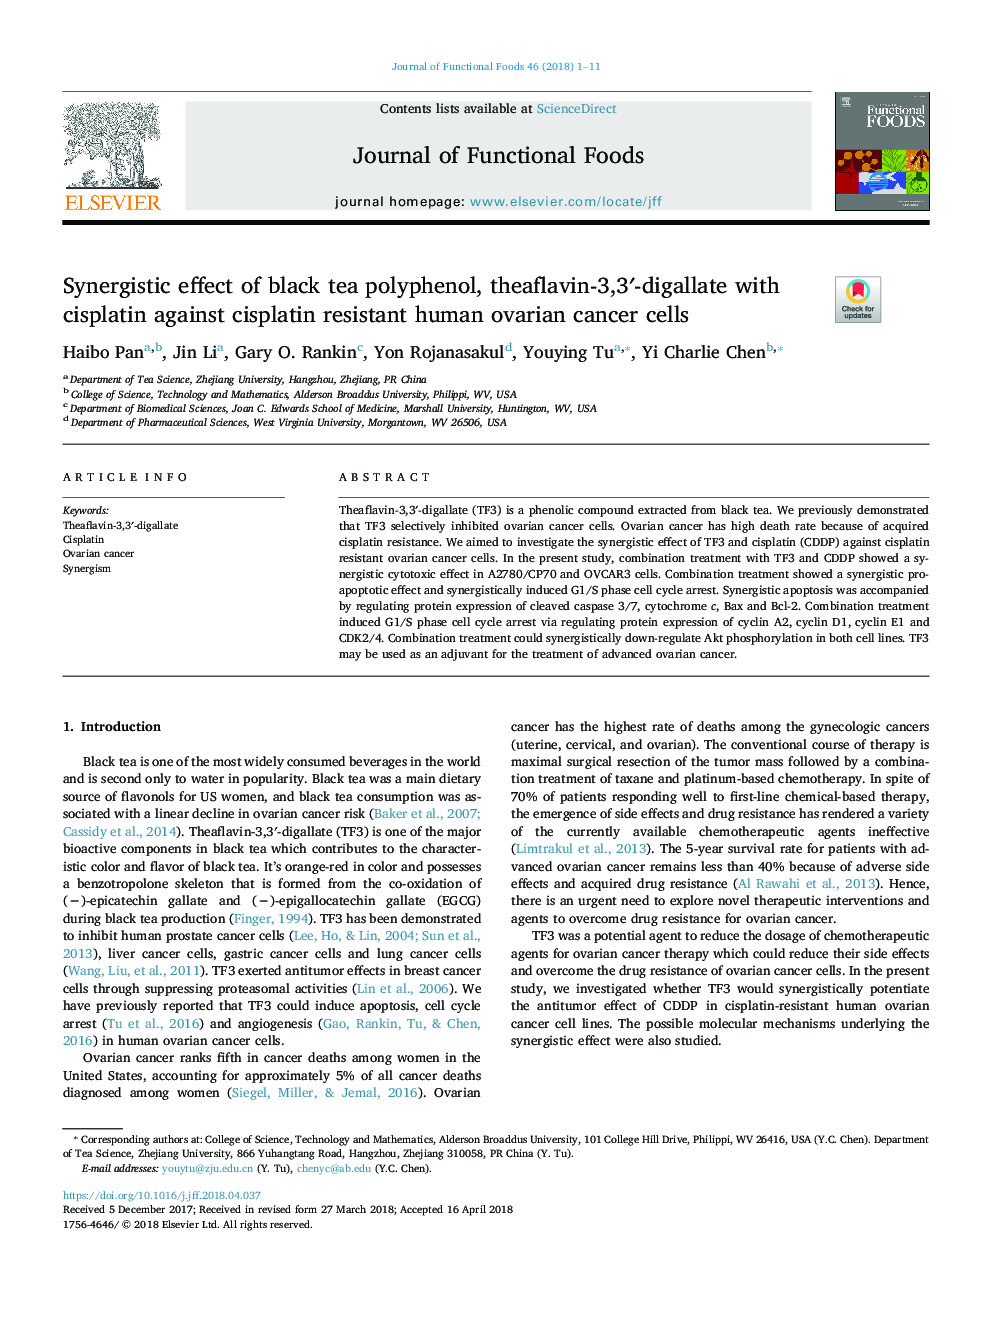 Synergistic effect of black tea polyphenol, theaflavin-3,3â²-digallate with cisplatin against cisplatin resistant human ovarian cancer cells